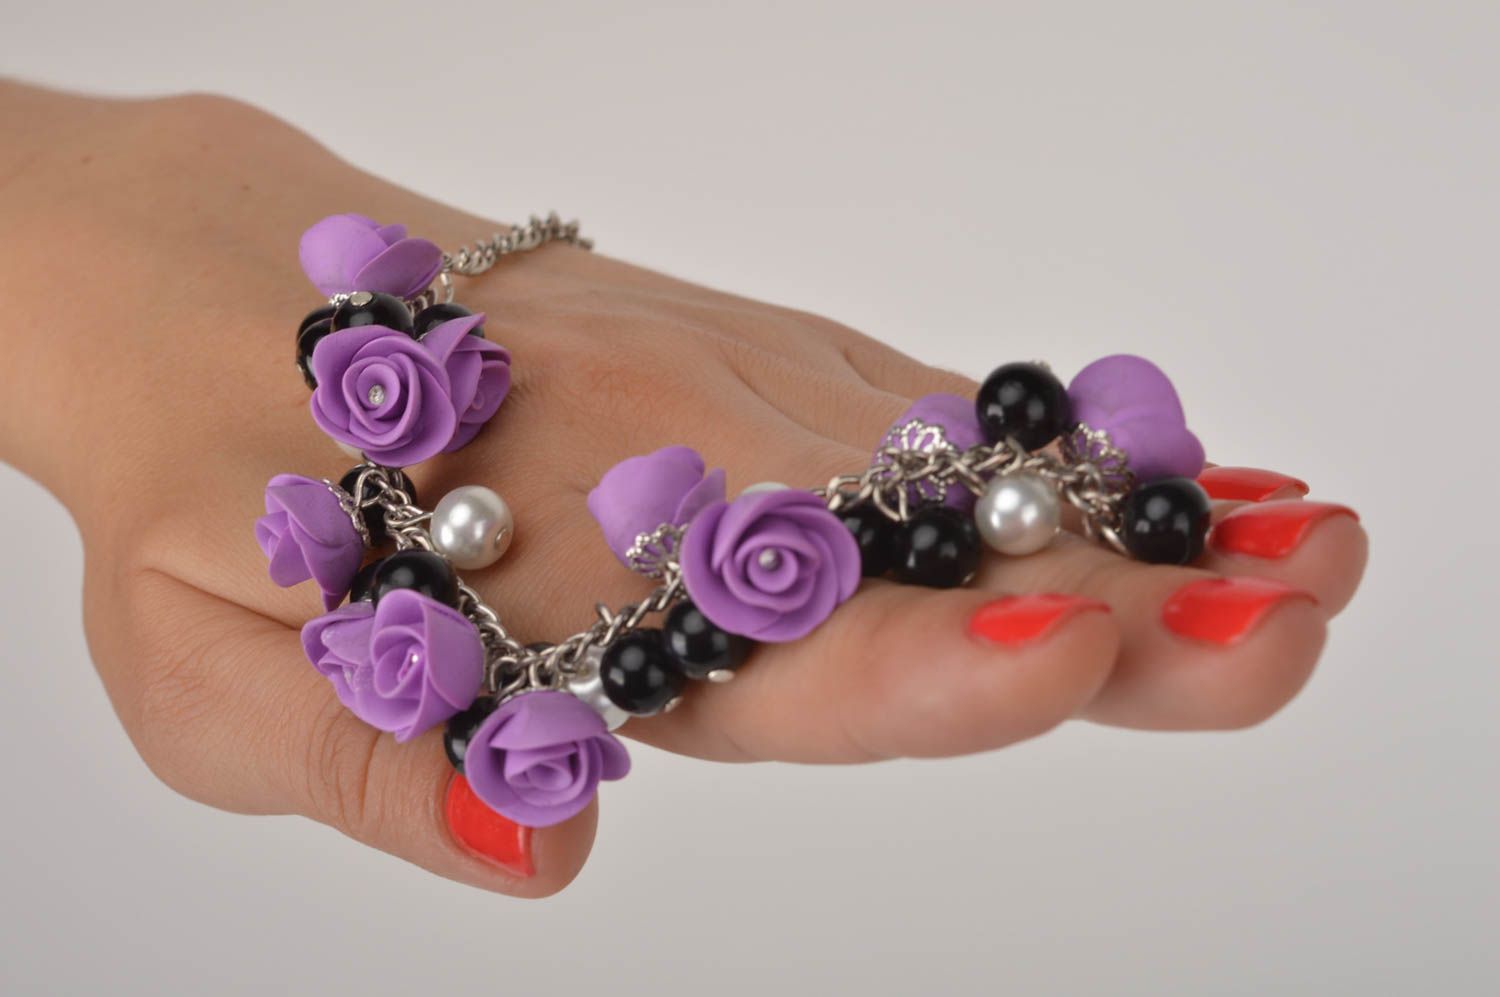 Stylish handmade plastic bracelet wrist bracelet designs polymer clay ideas photo 2